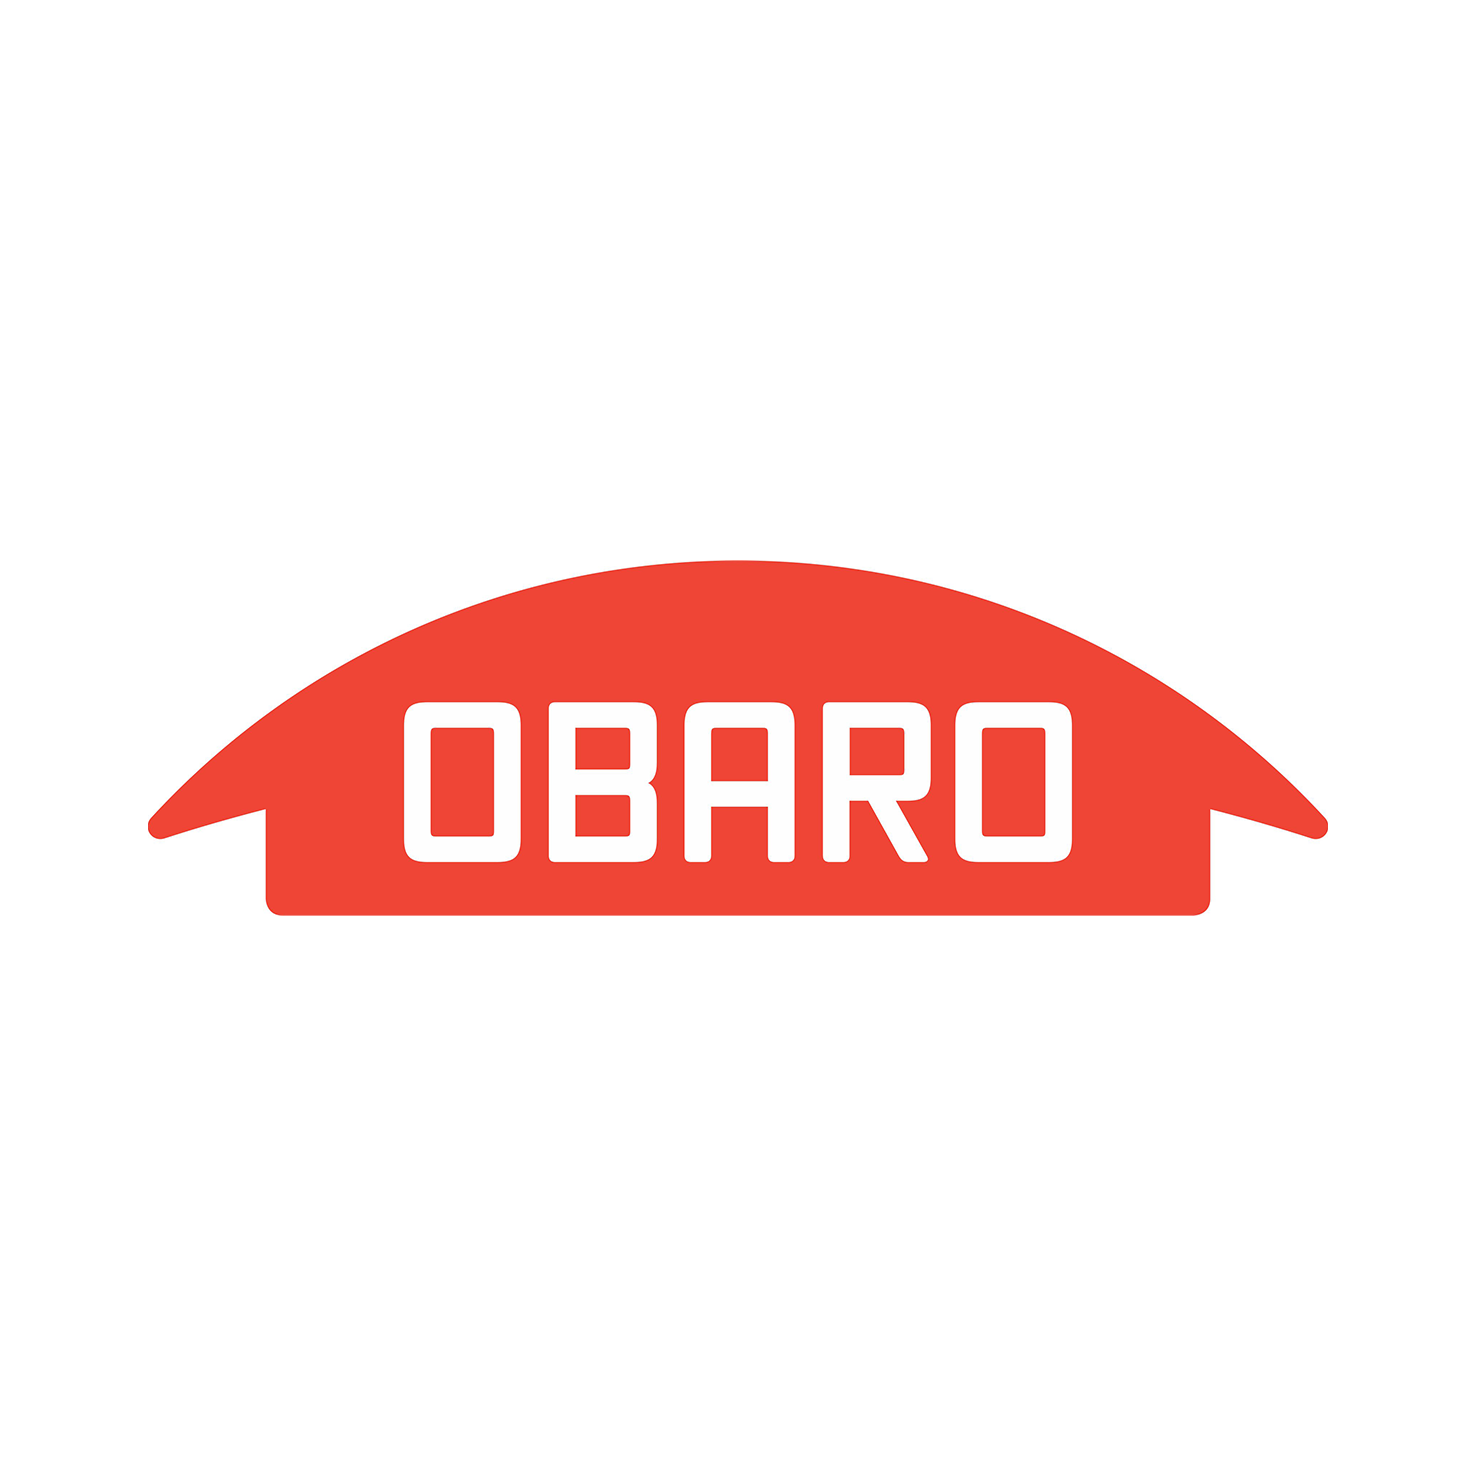 Obaro - Rustenburg logo